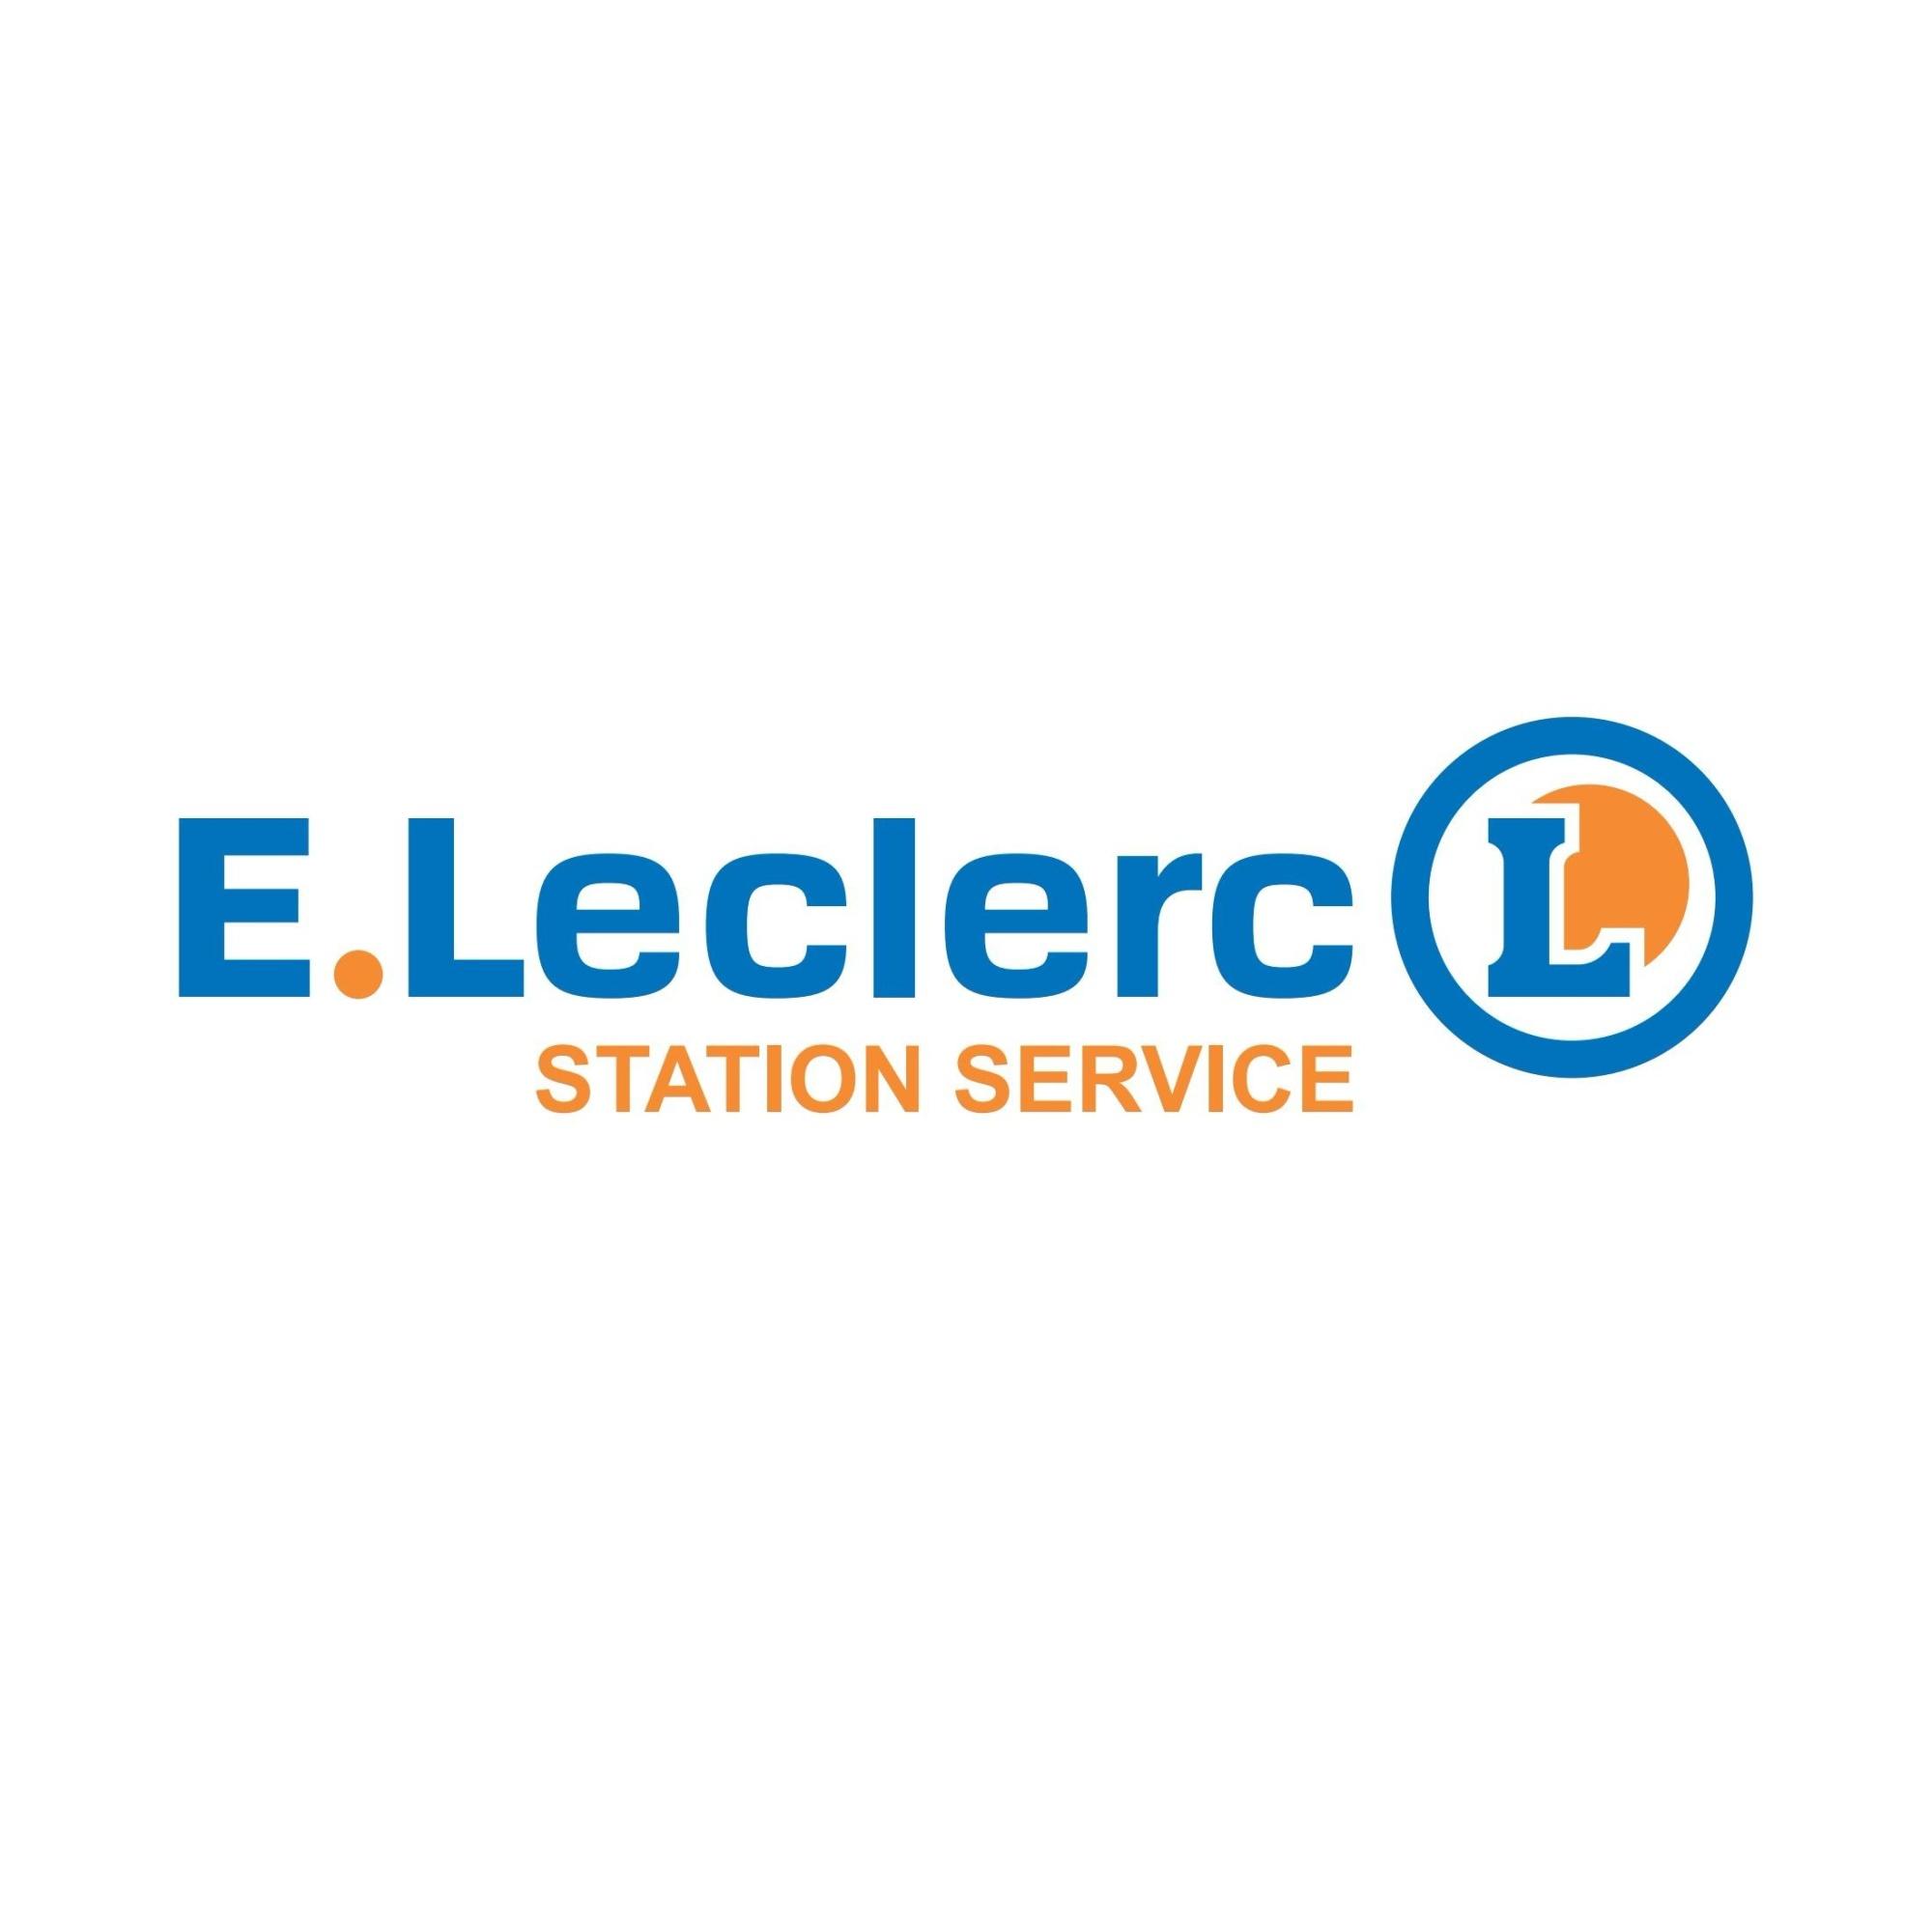 E.leclerc Station Service Langon